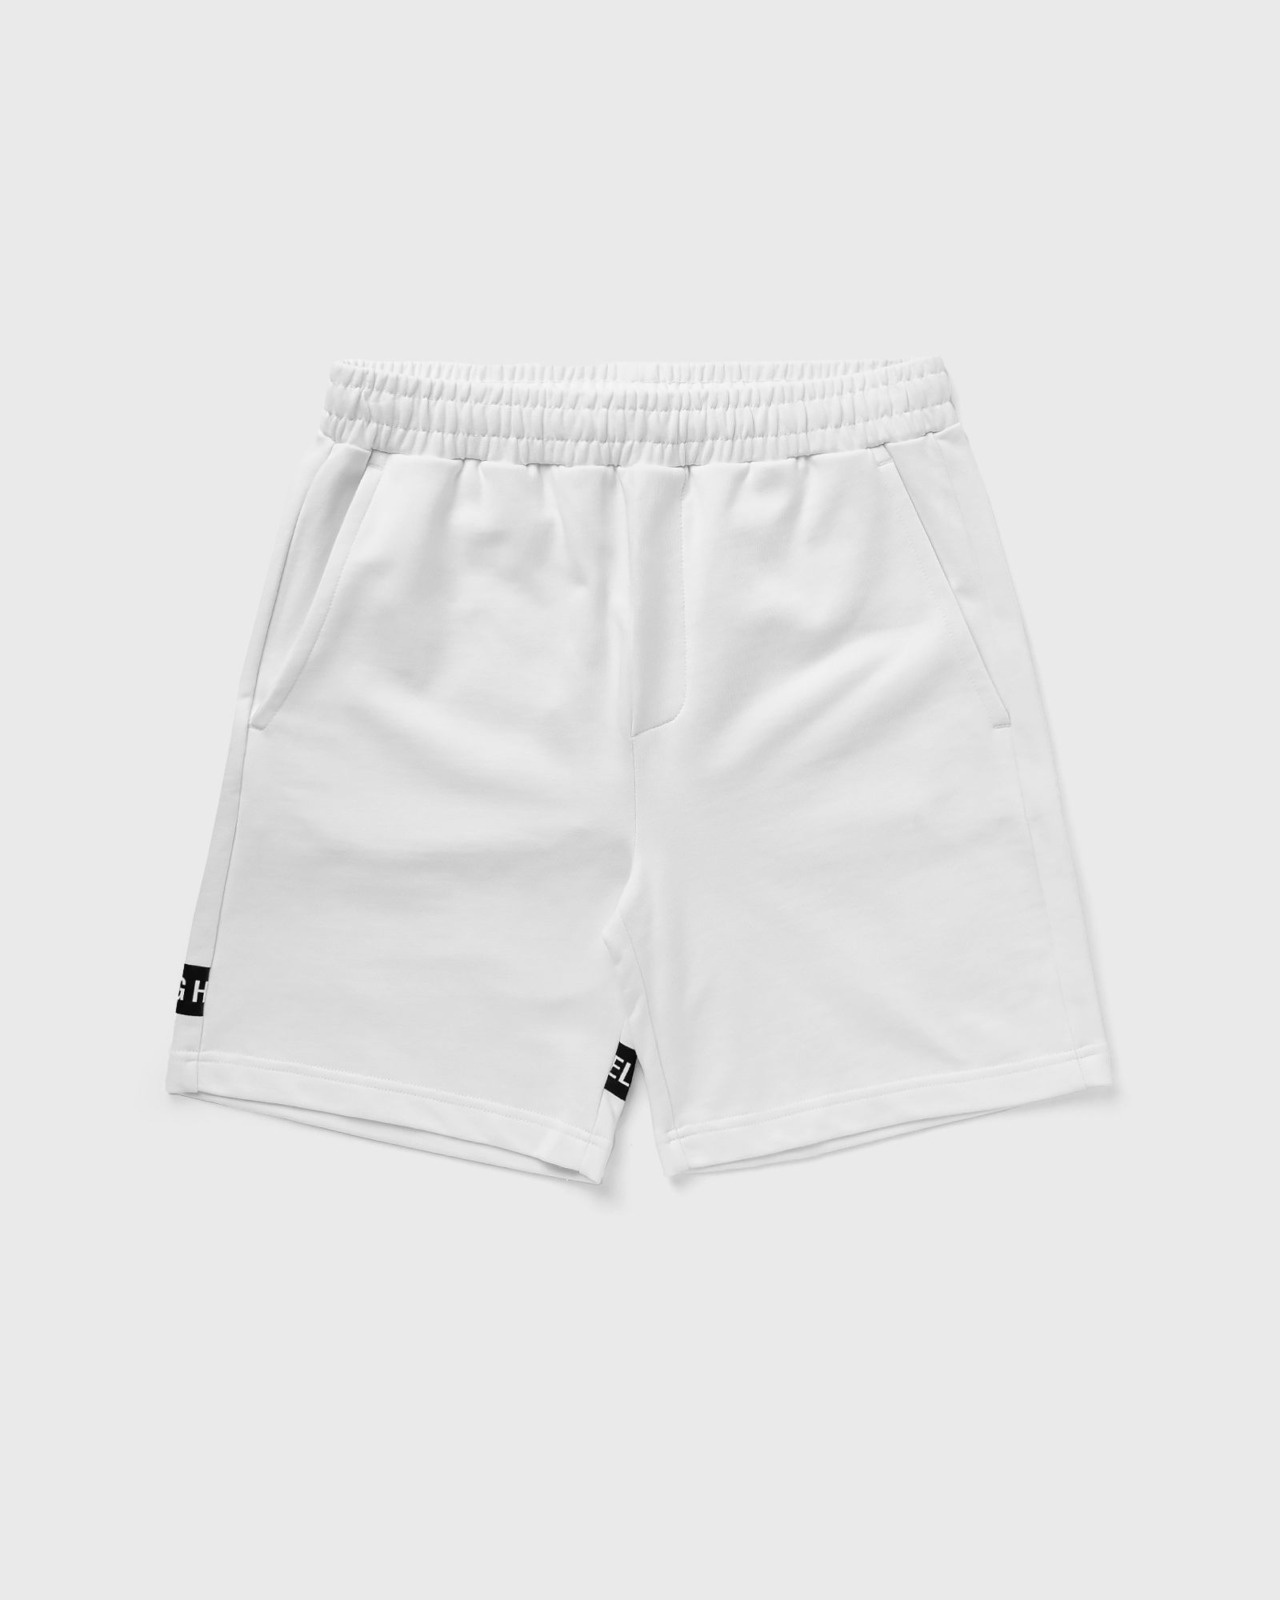 Gent White Shorts at Bstn GOOFASH